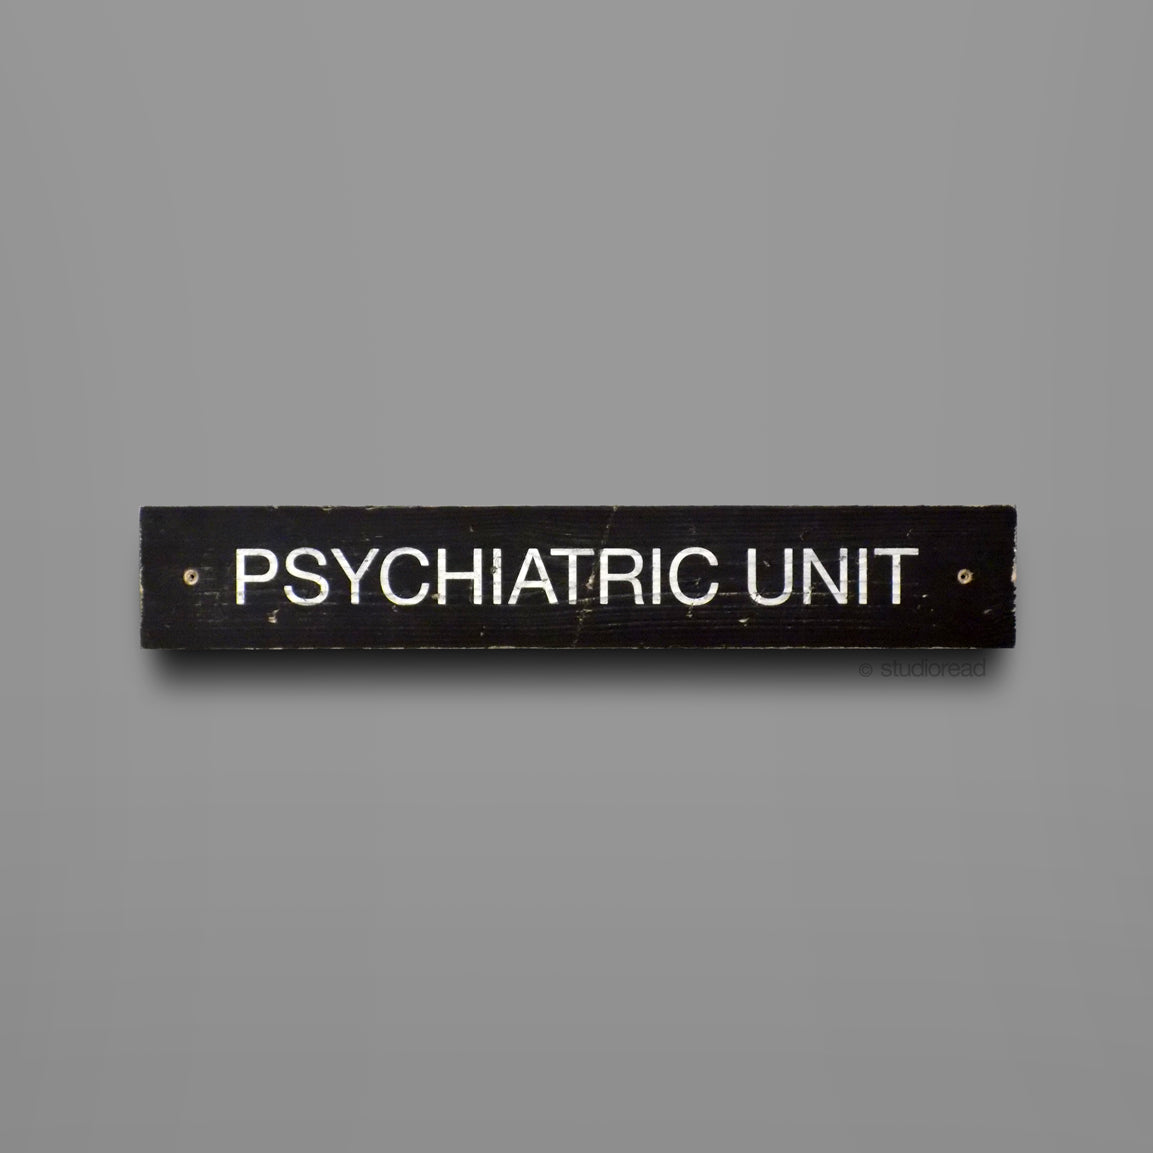 Psychiatric Unit - Sign